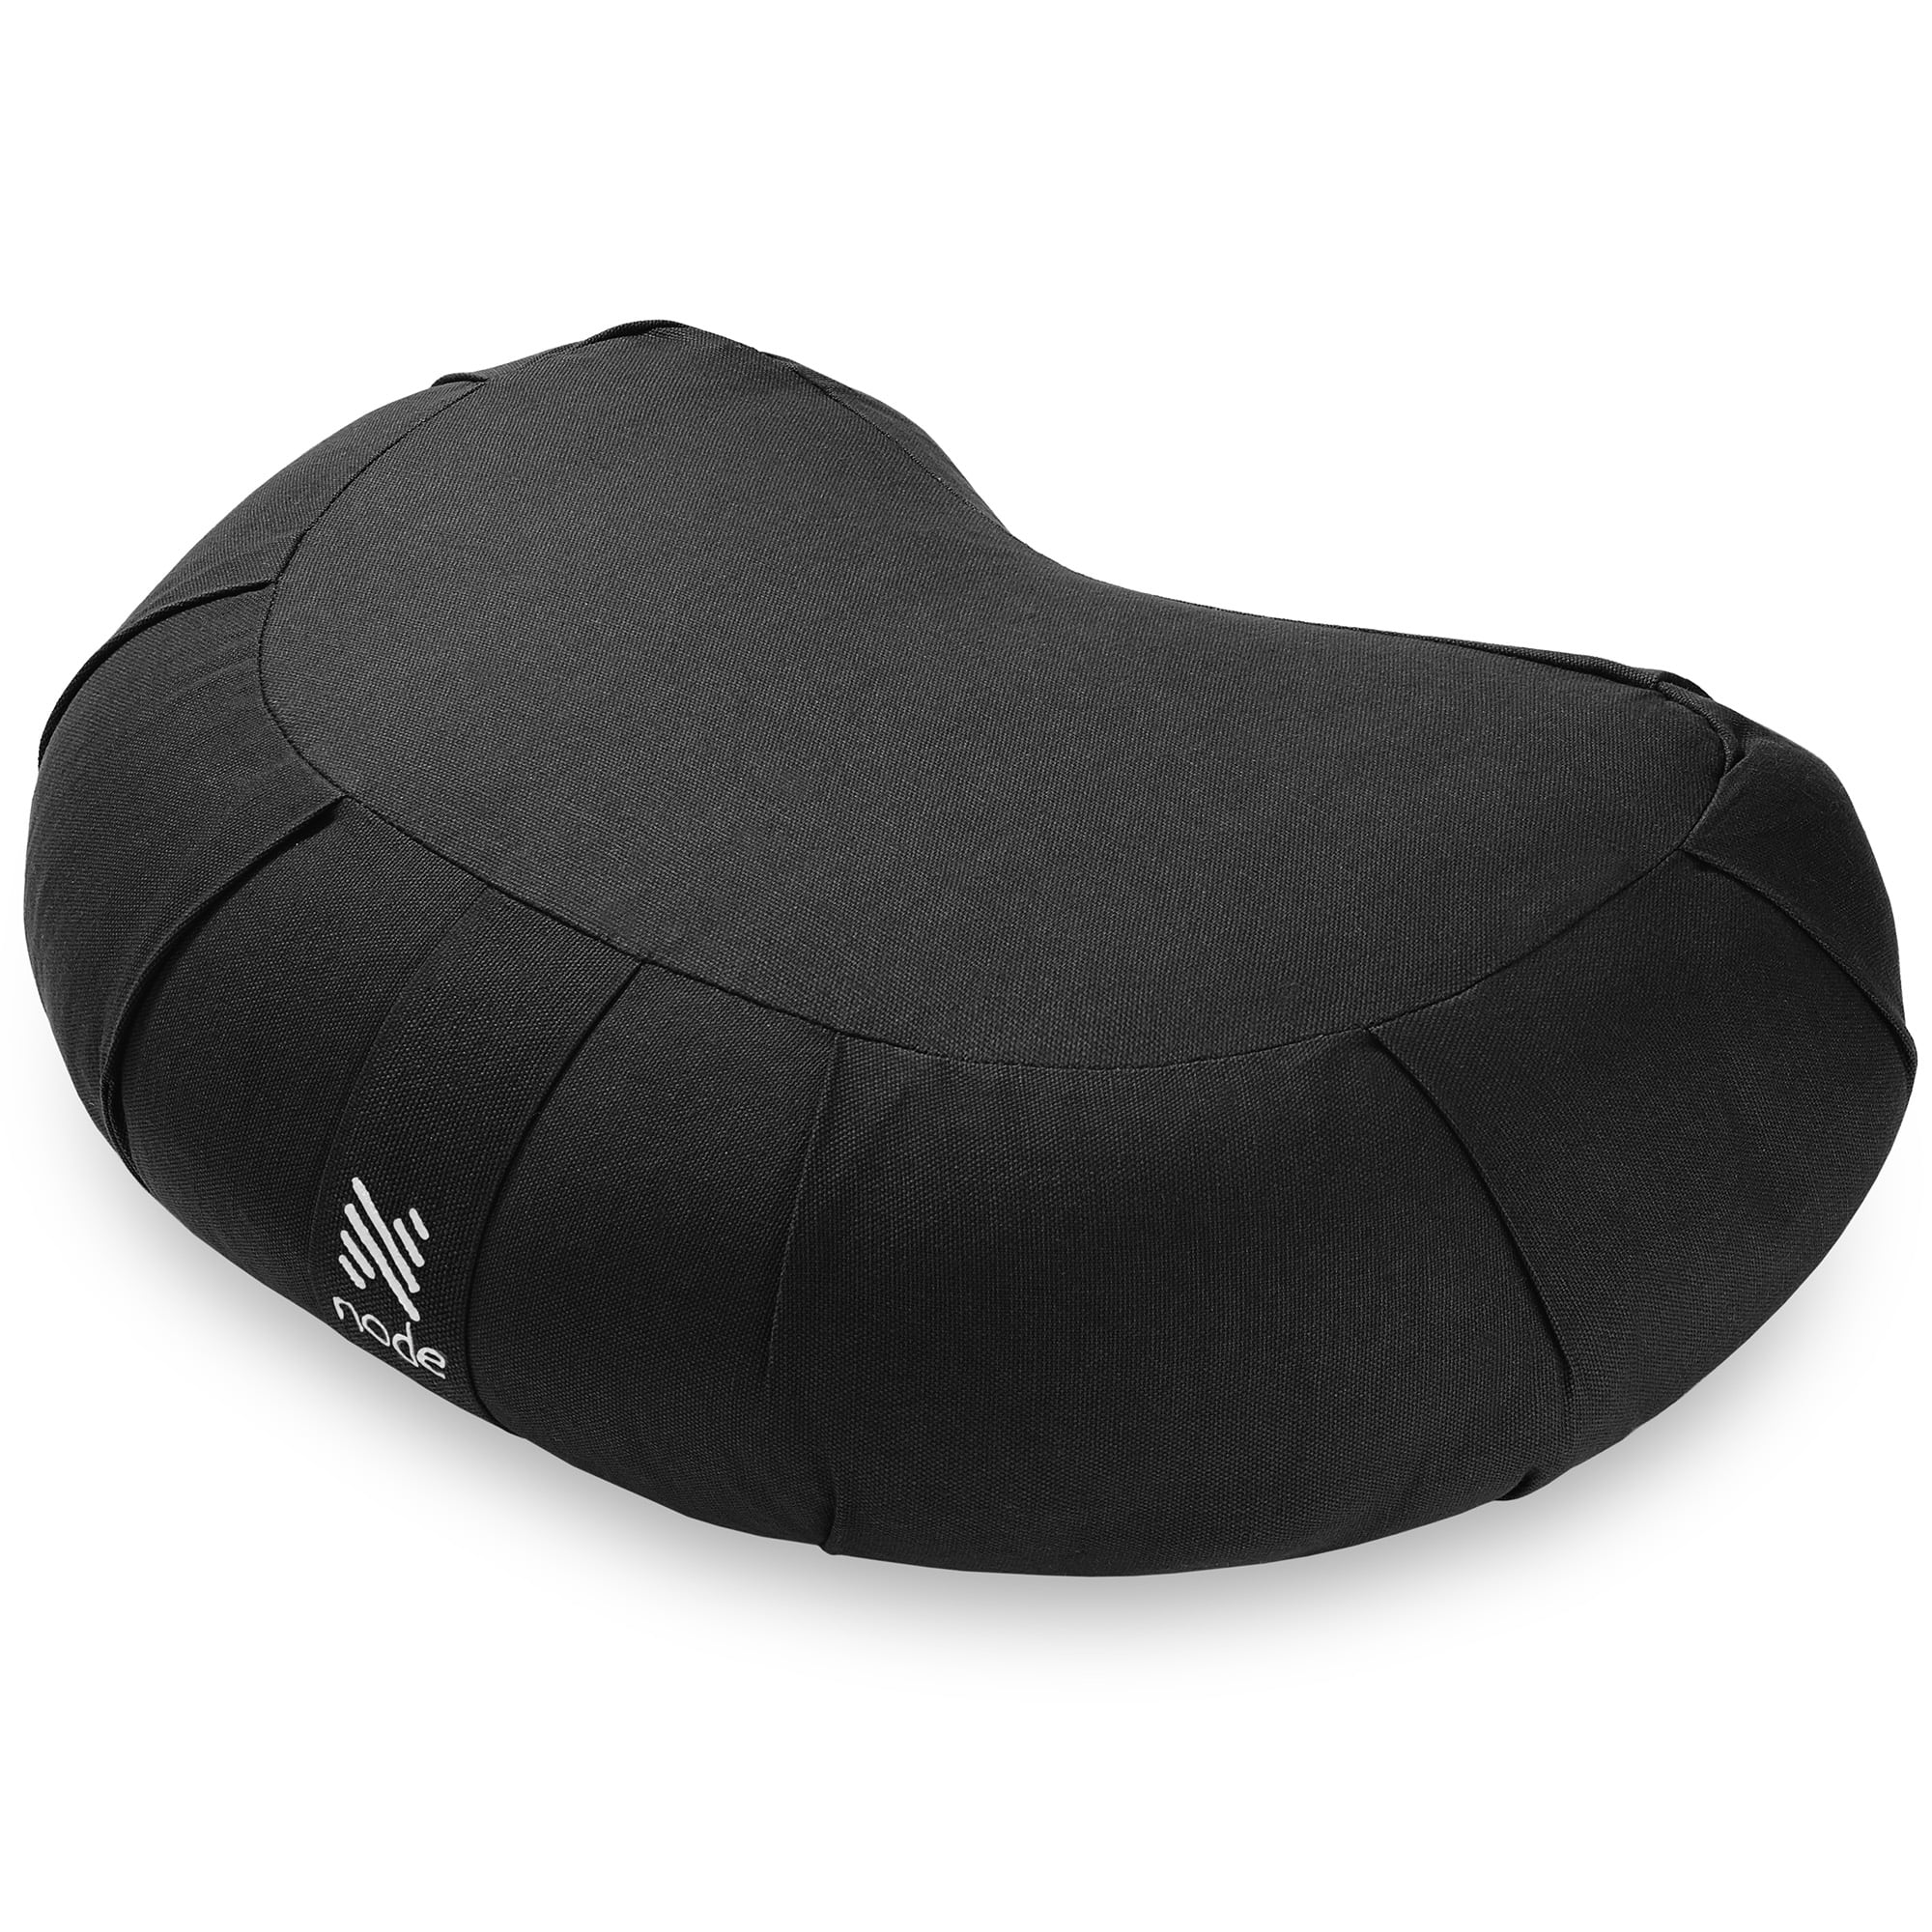 Node Fitness Zafu Meditation Cushion with Buckwheat Hulls, 17 Crescent  Yoga Bolster Pillow with Organic Cotton Cover - Gray